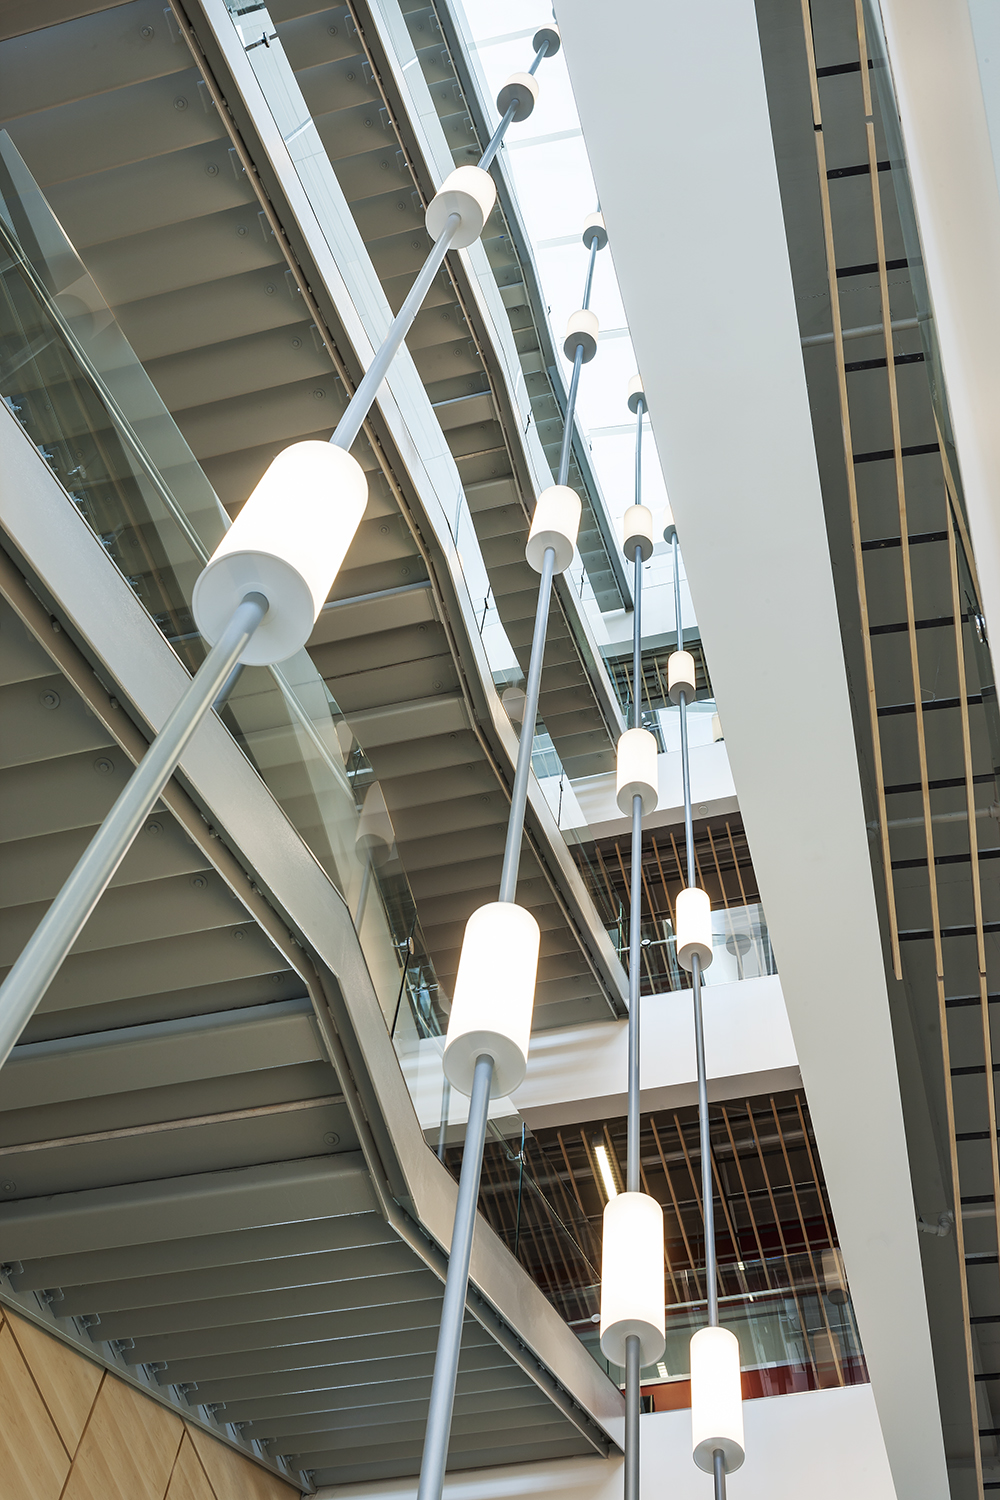 Sequence pendants enhance educational interior design in a tandem-mount configuration for a multi-level atrium.